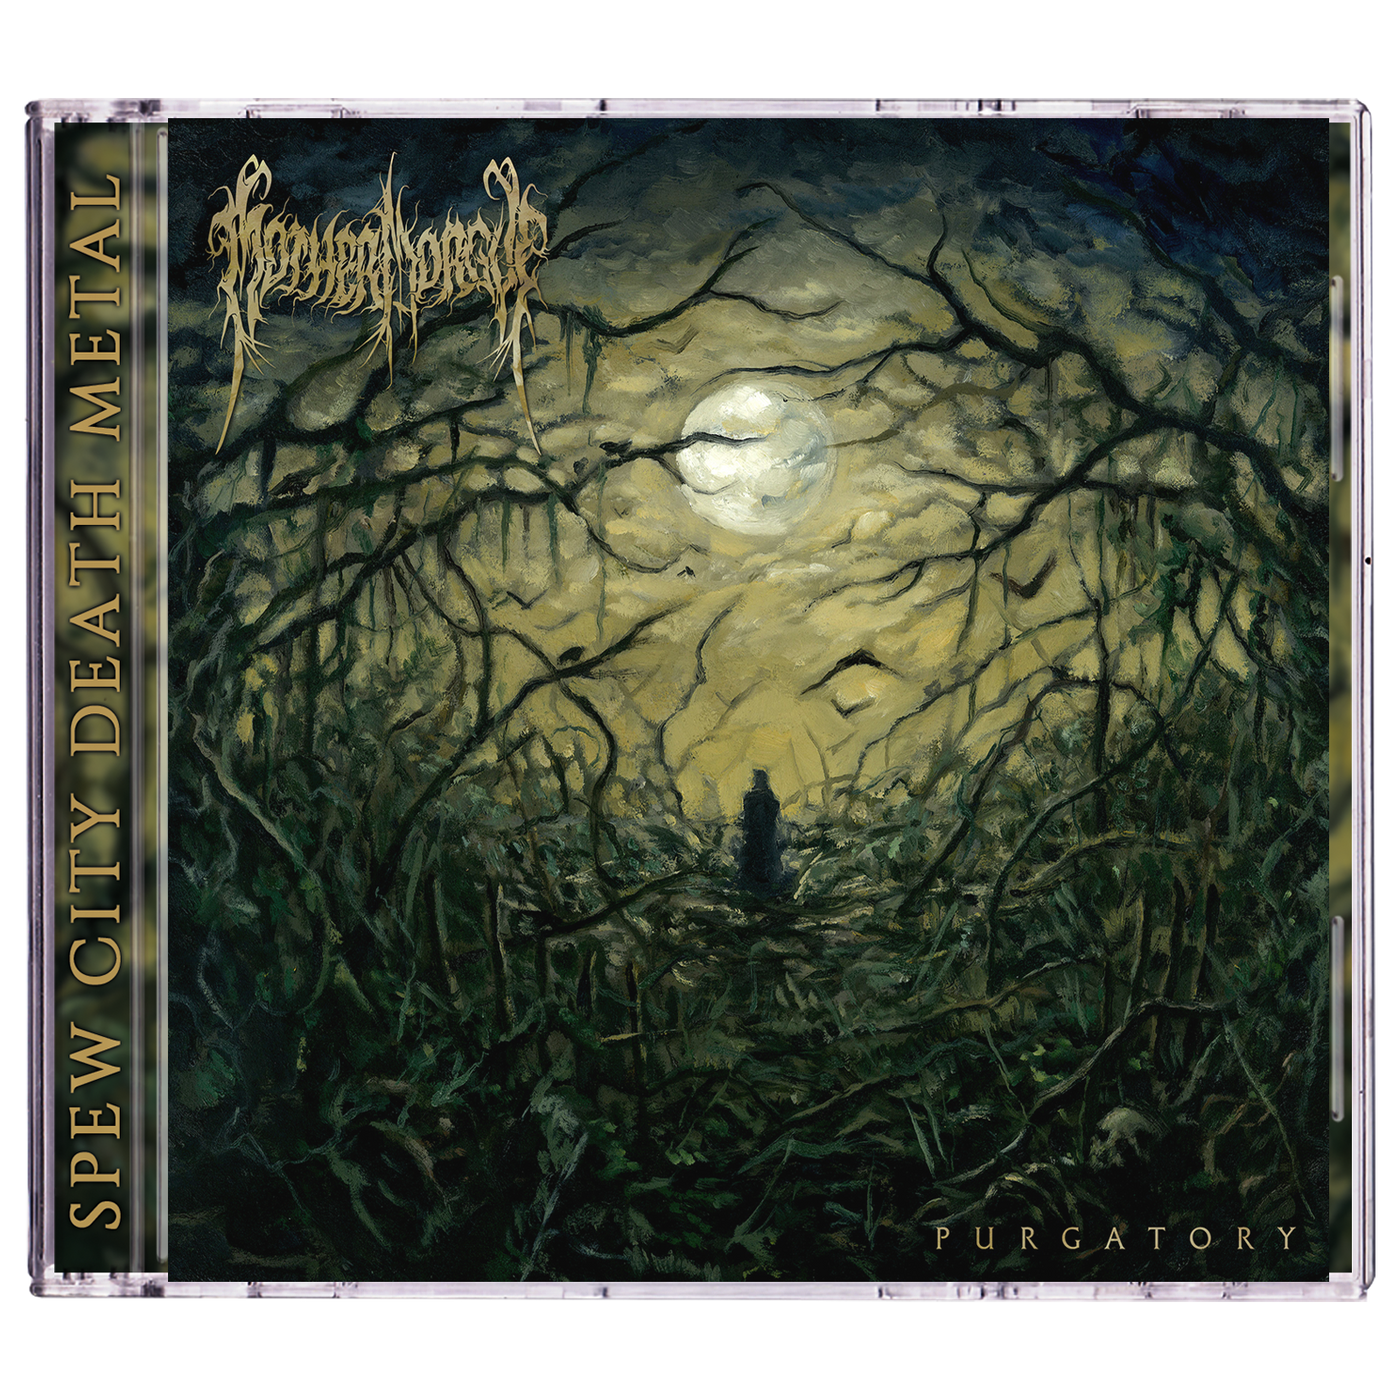 Mother Morgue 'Purgatory' CD